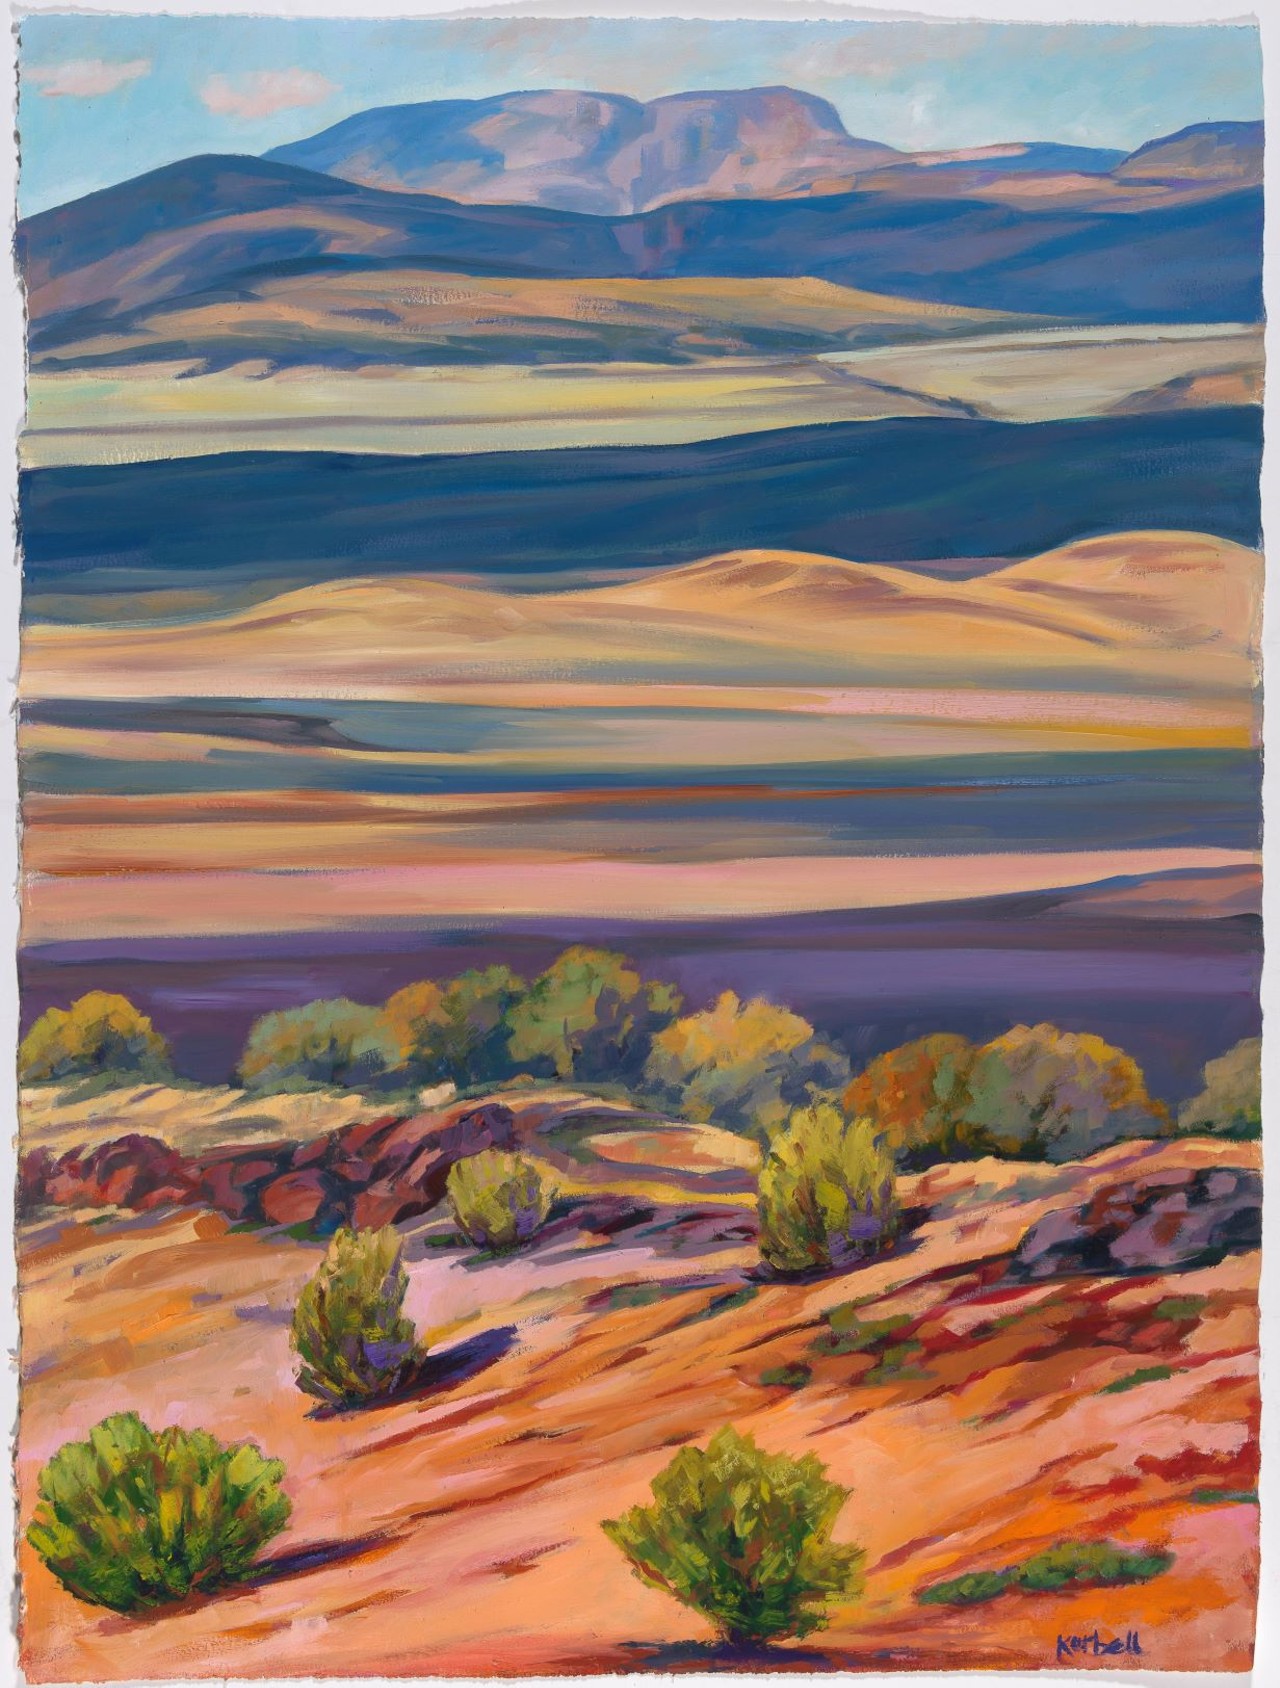 Caroline Korbell Carrington, "Presidio del Norte", Oil on Paper, 30" x 22", $3,800